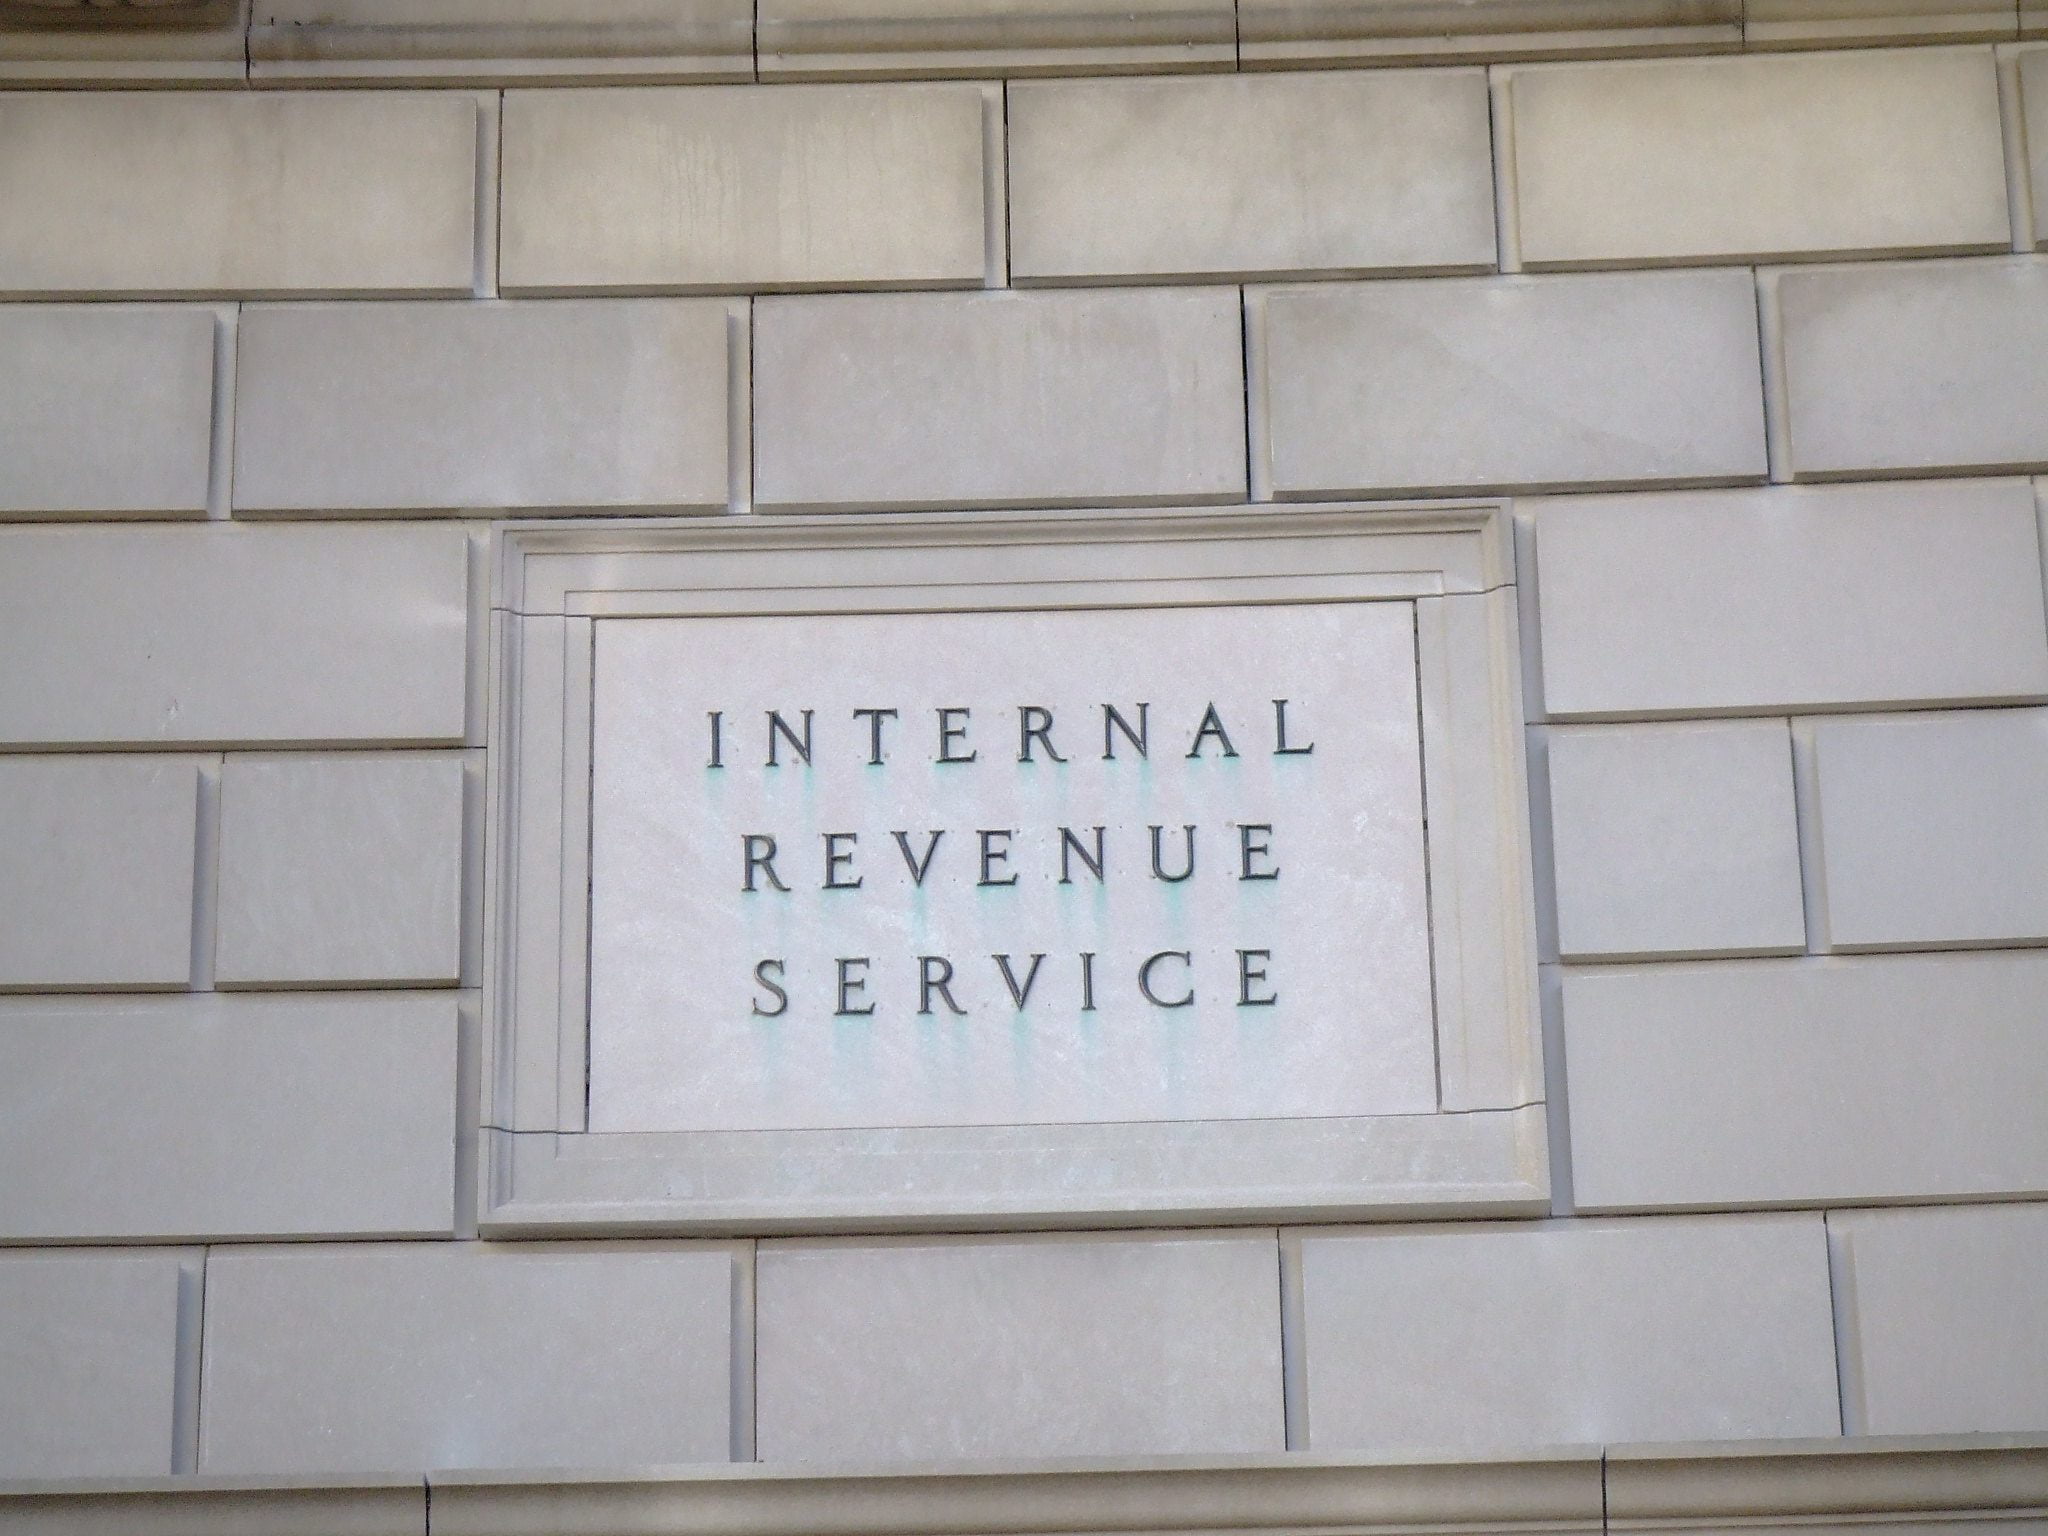 Internal Revenue Service signage